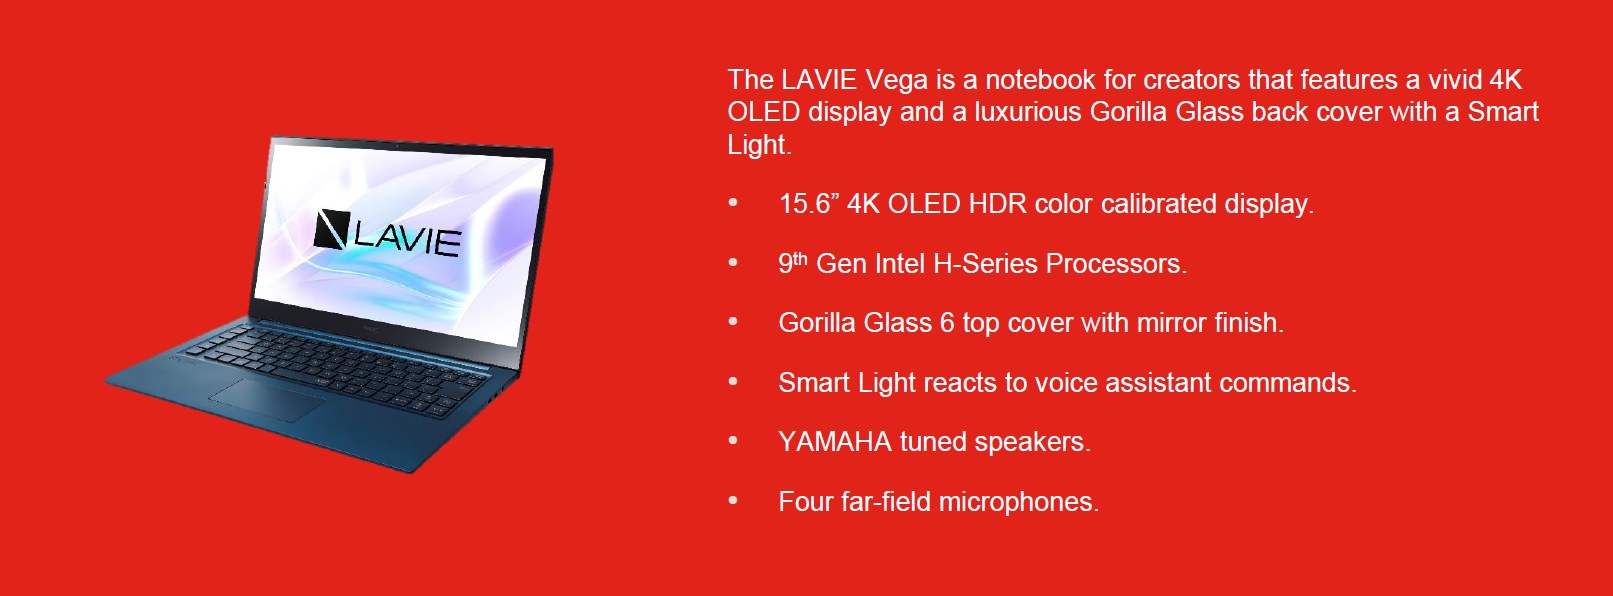 CES 2020: Lenovo partner LAVIE brings Japanese minimalism to productivity - OnMSFT.com - January 3, 2020